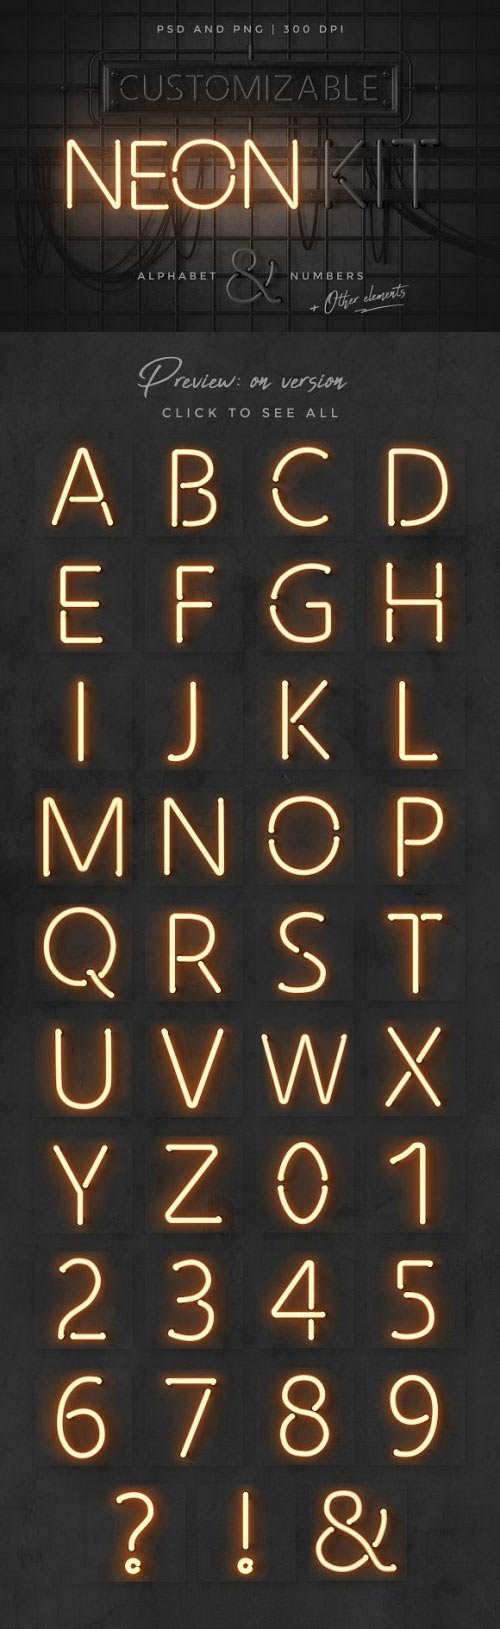 Neon alphabet kit 2245956